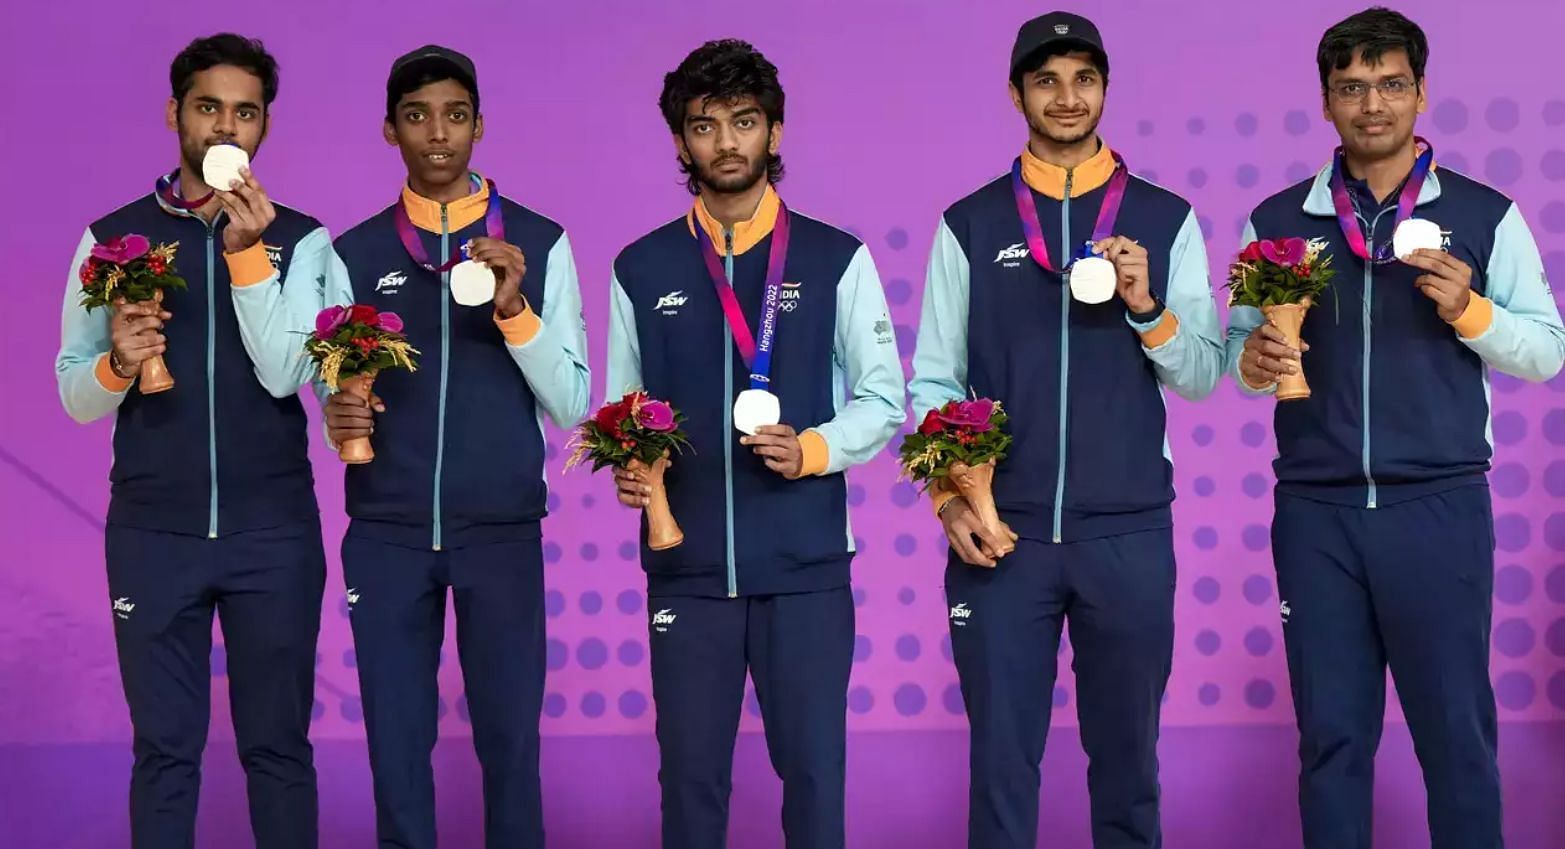 Chess Silver Medal - India at Asian Games 2022